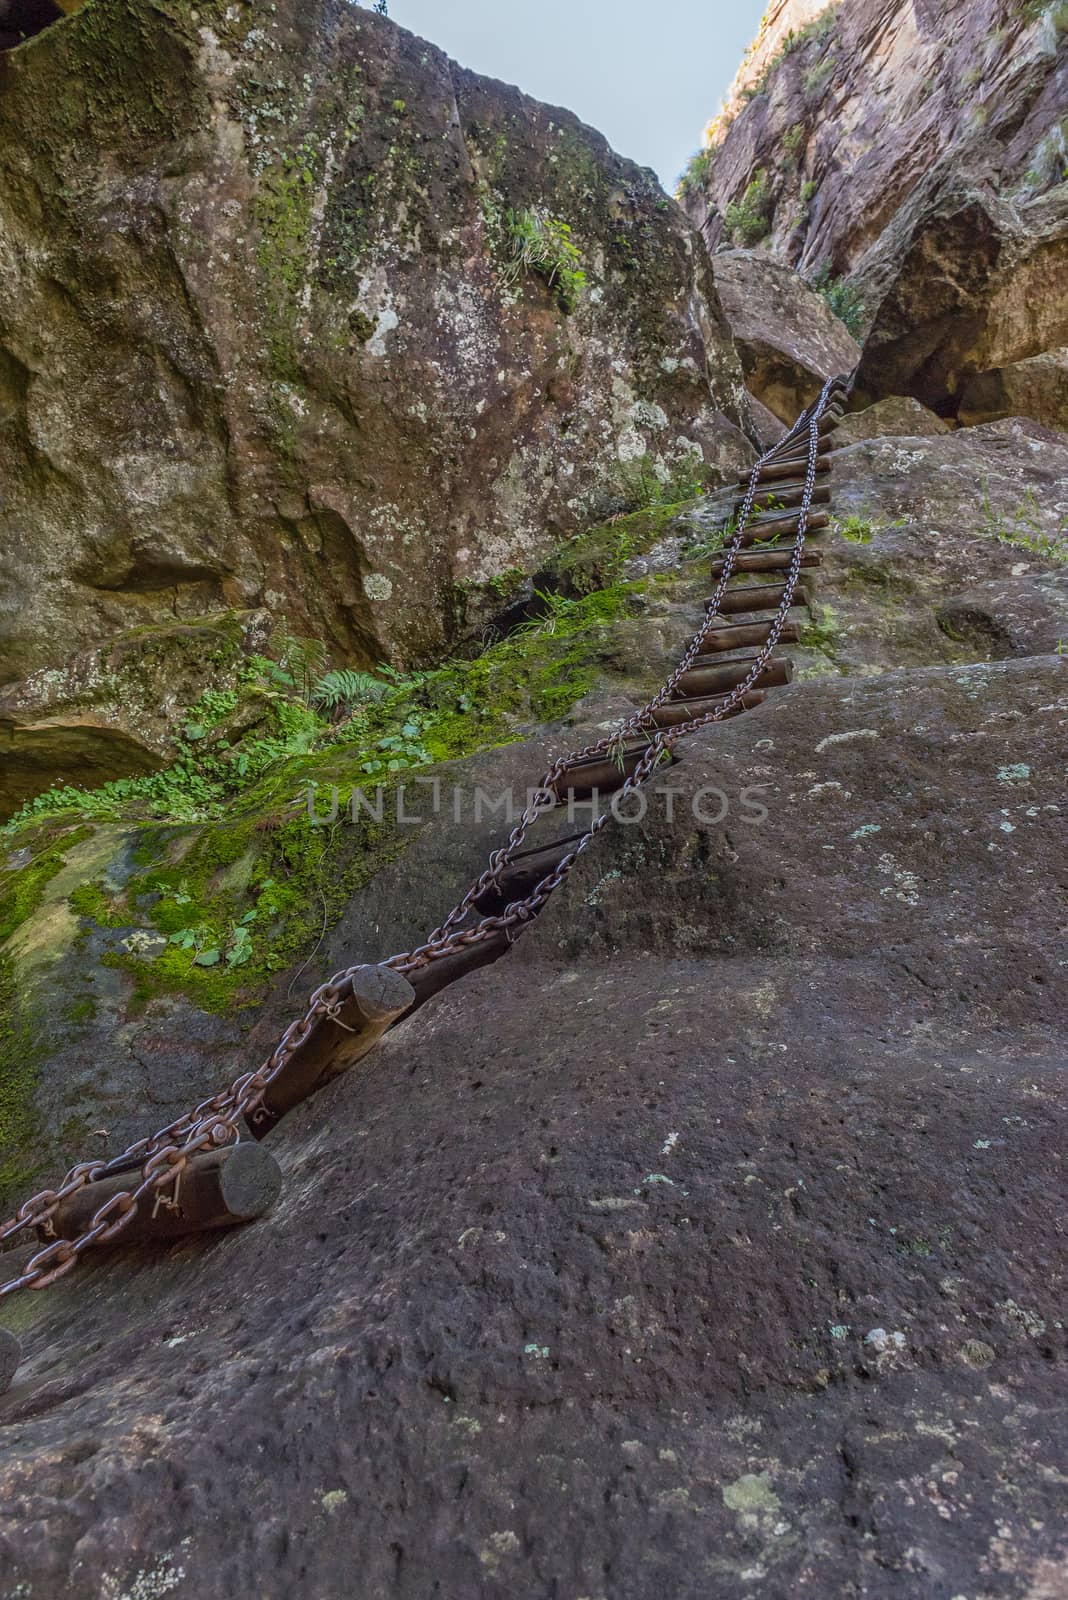 Chain ladder in the Crack near Mahai in the Drakensberg by dpreezg